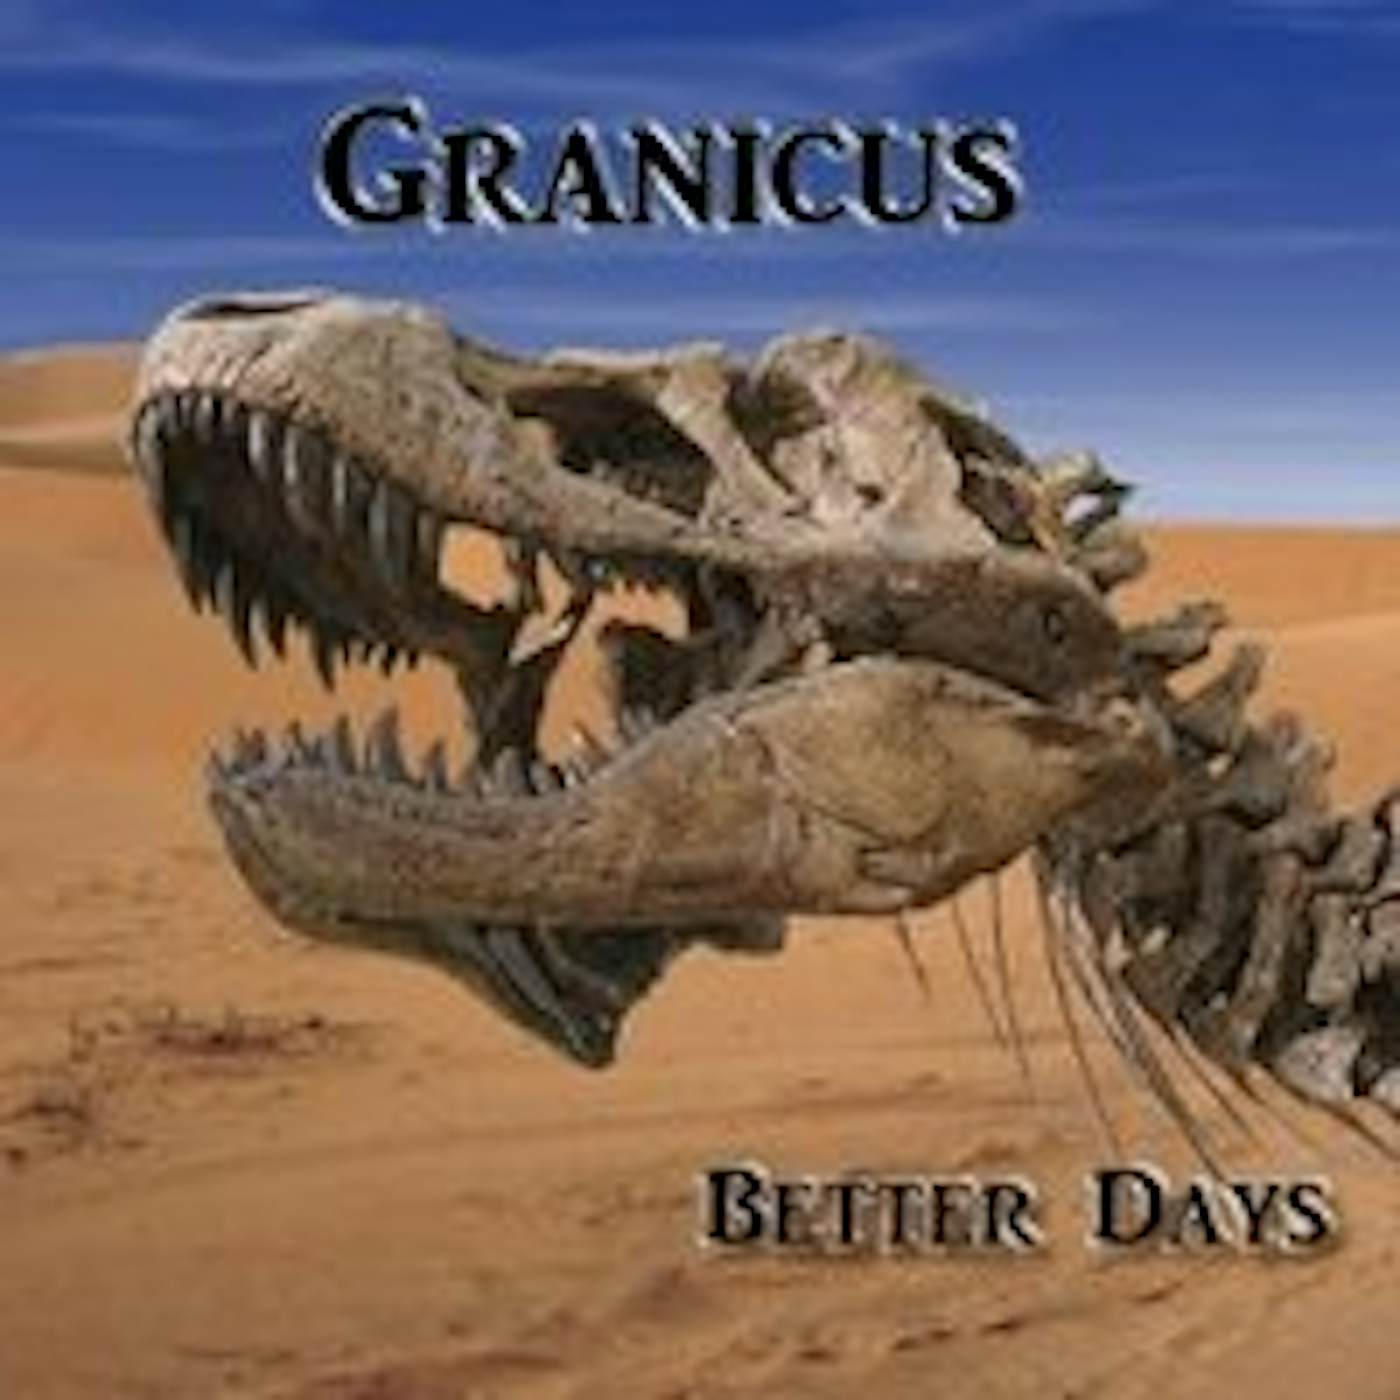 Granicus BETTER DAYS CD